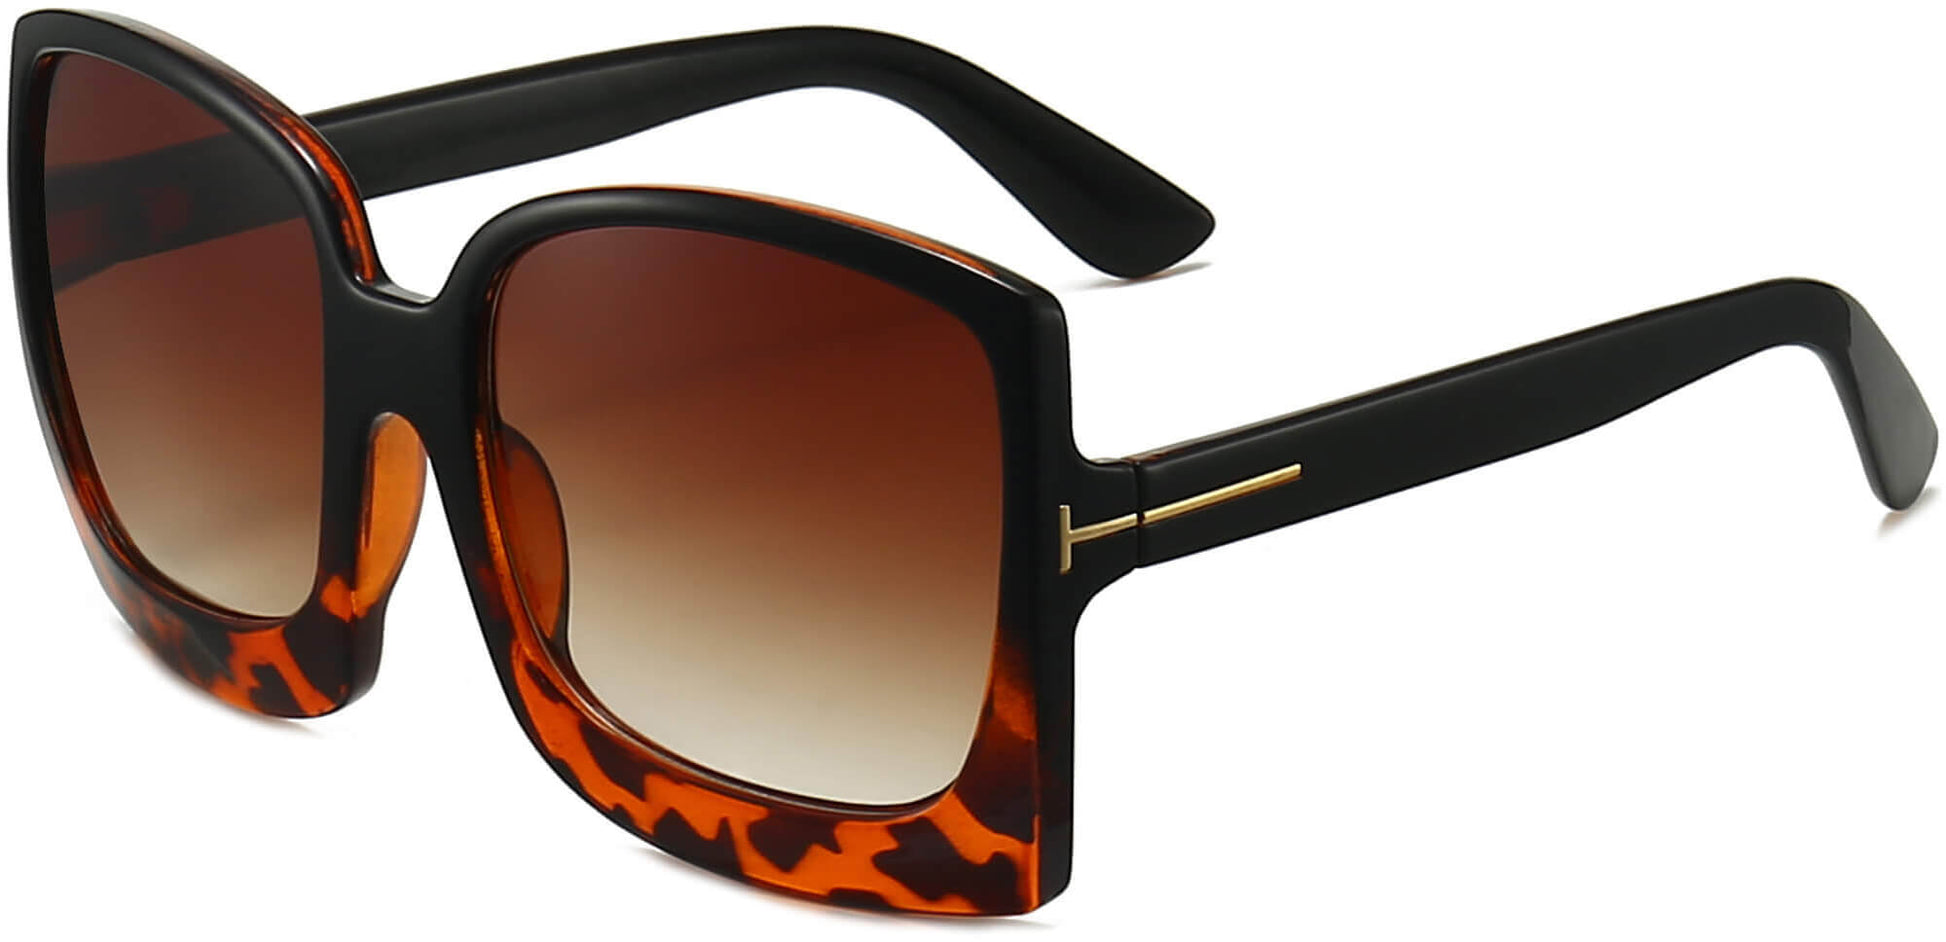 Khloe Black Plastic Sunglasses from ANRRI, angle view